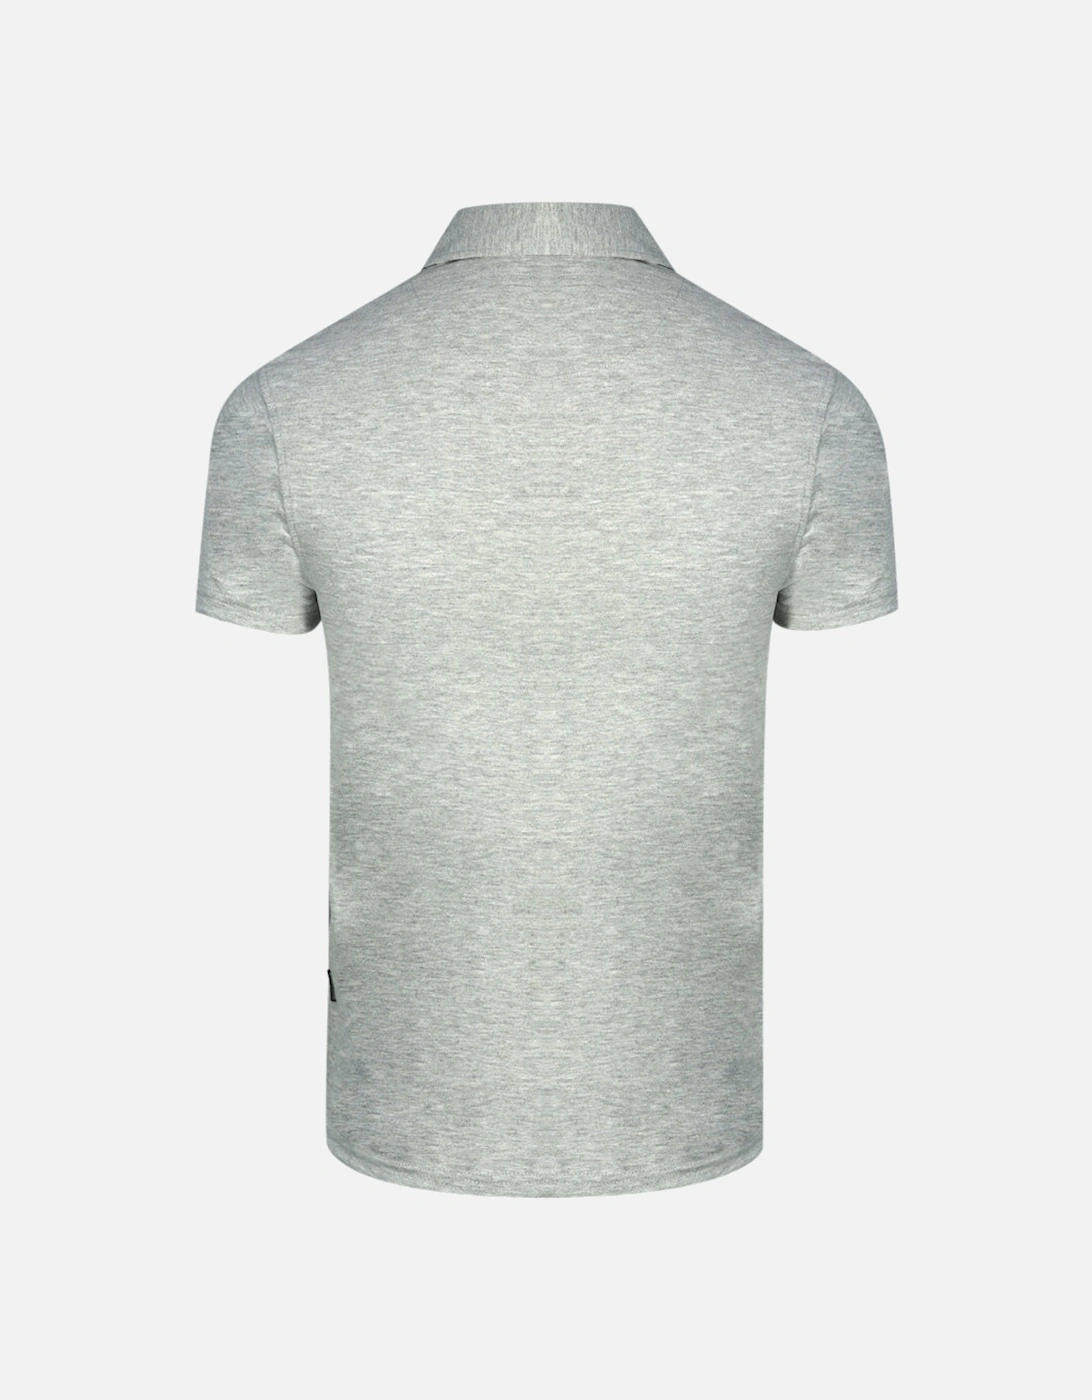 Aldis Brand London Logo Grey Polo Shirt